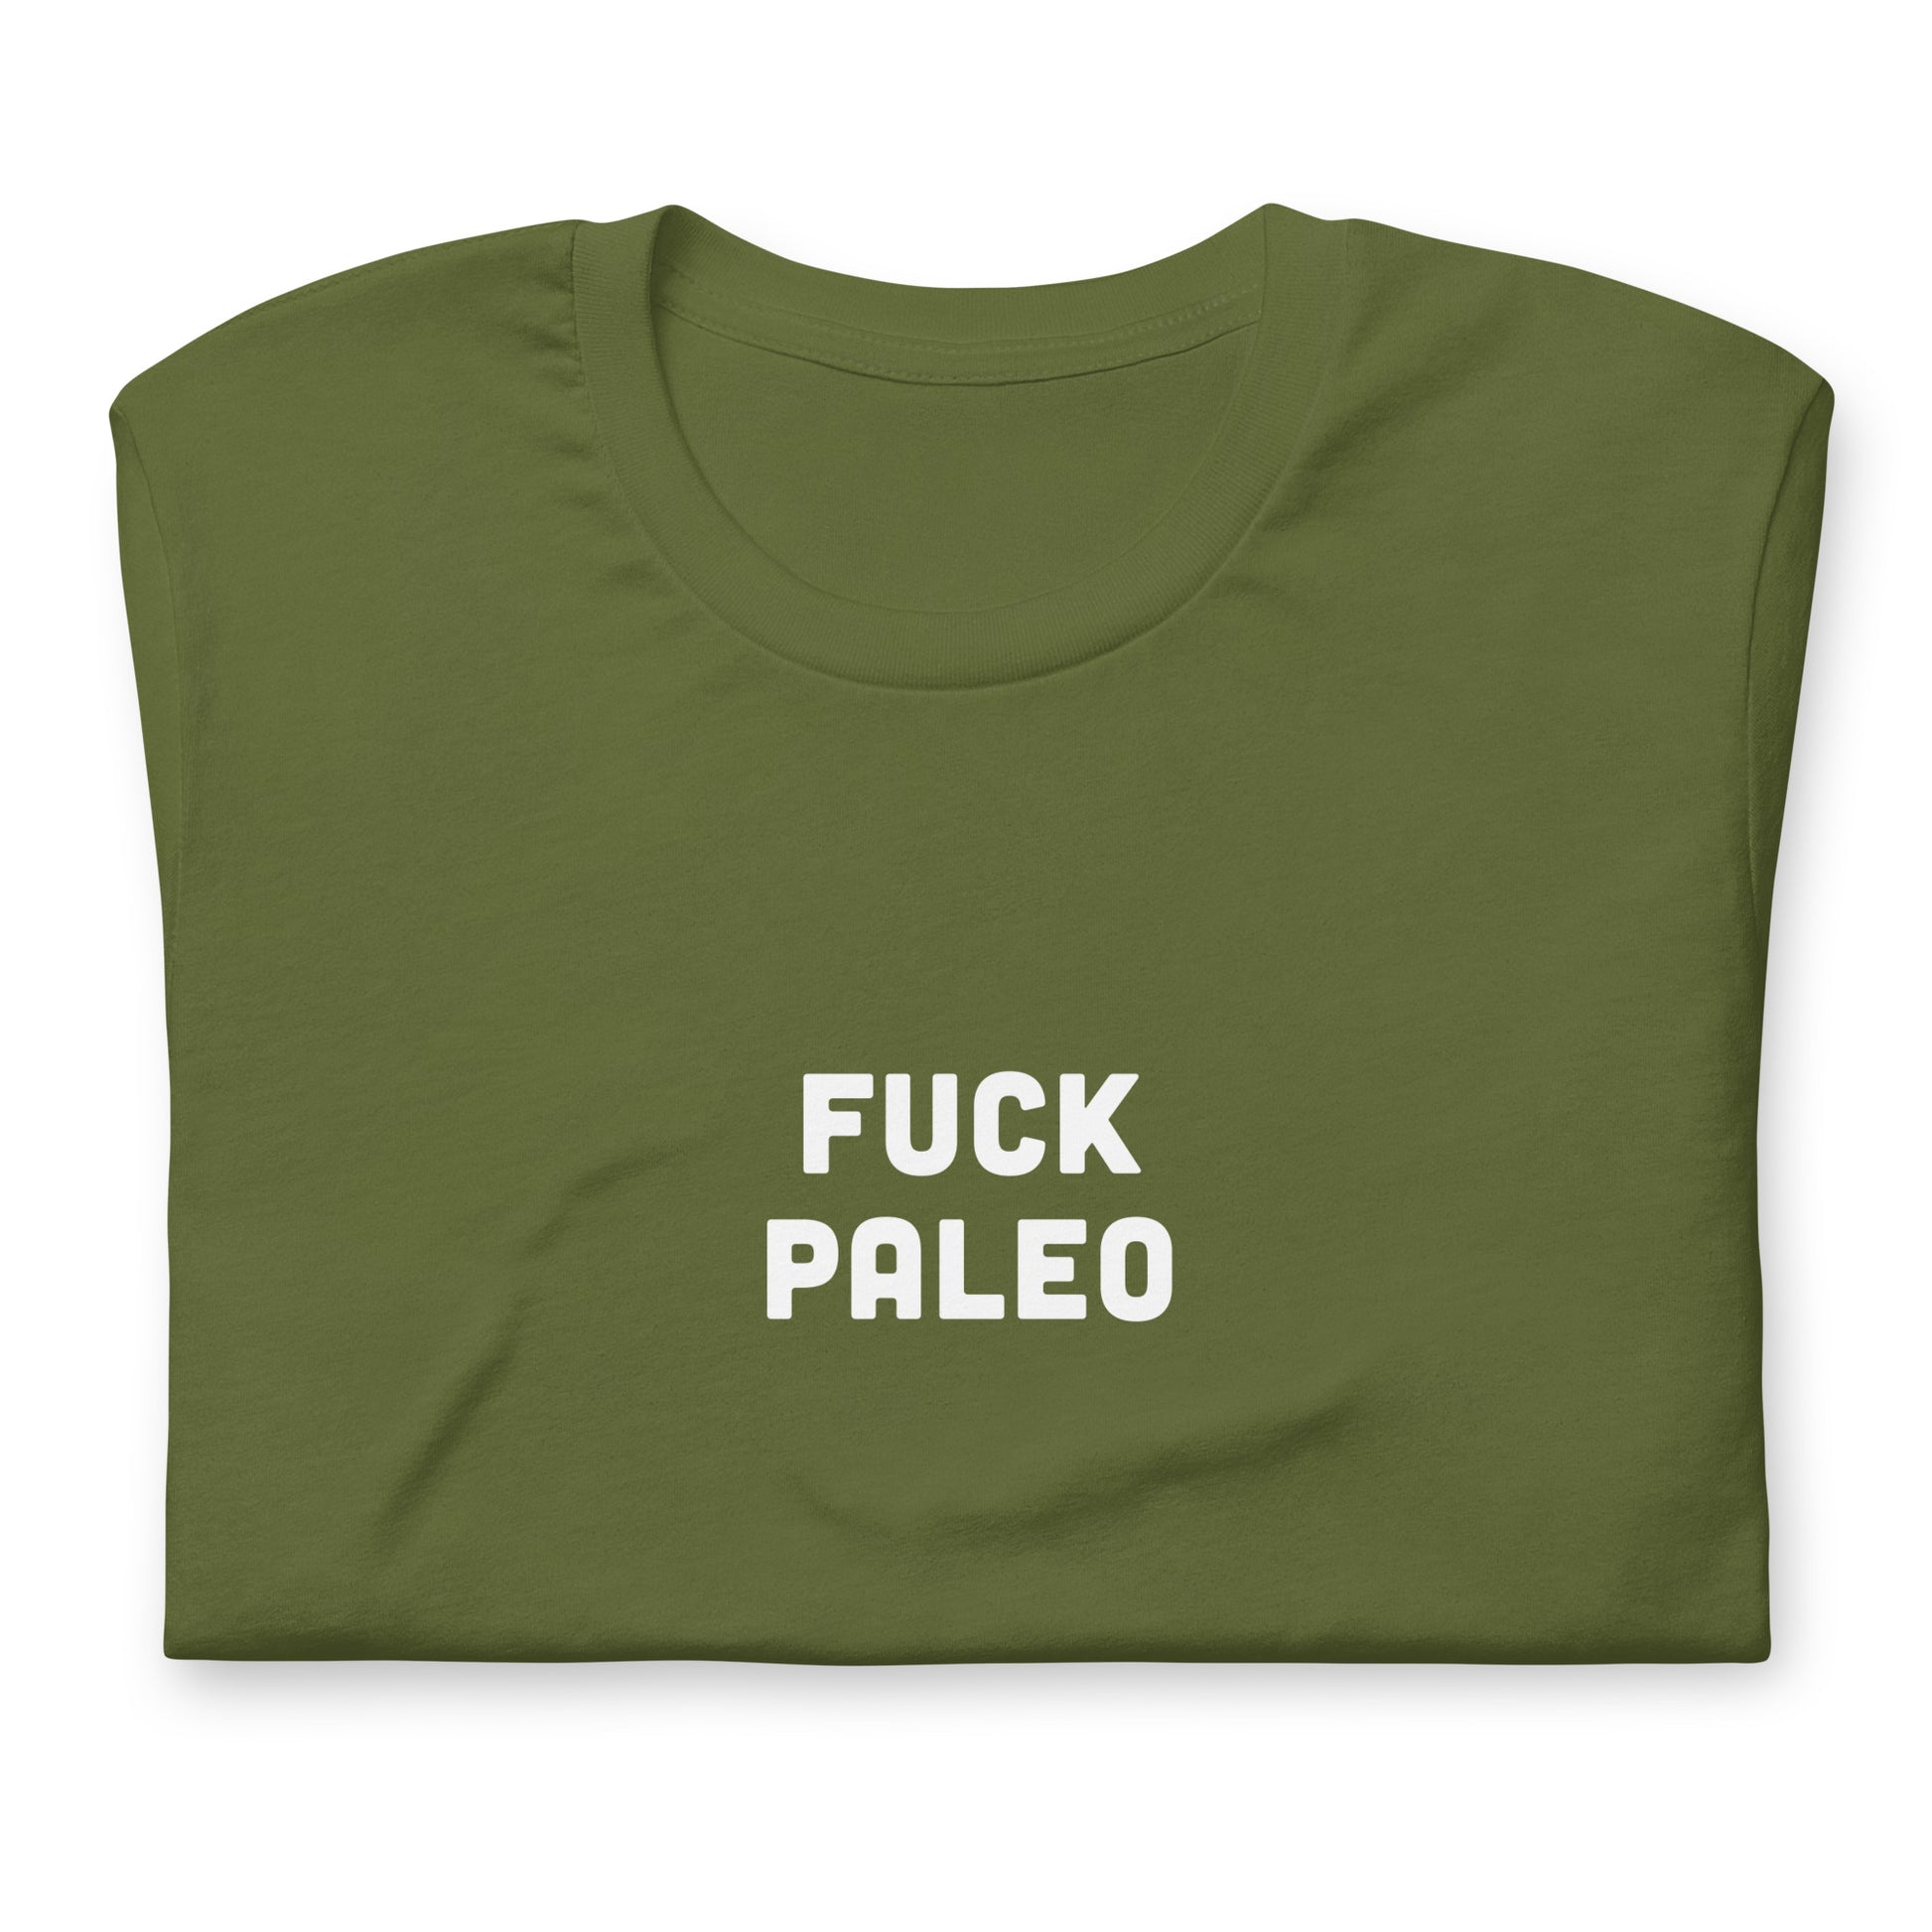 Fuck Paleo T-Shirt Size S Color Navy